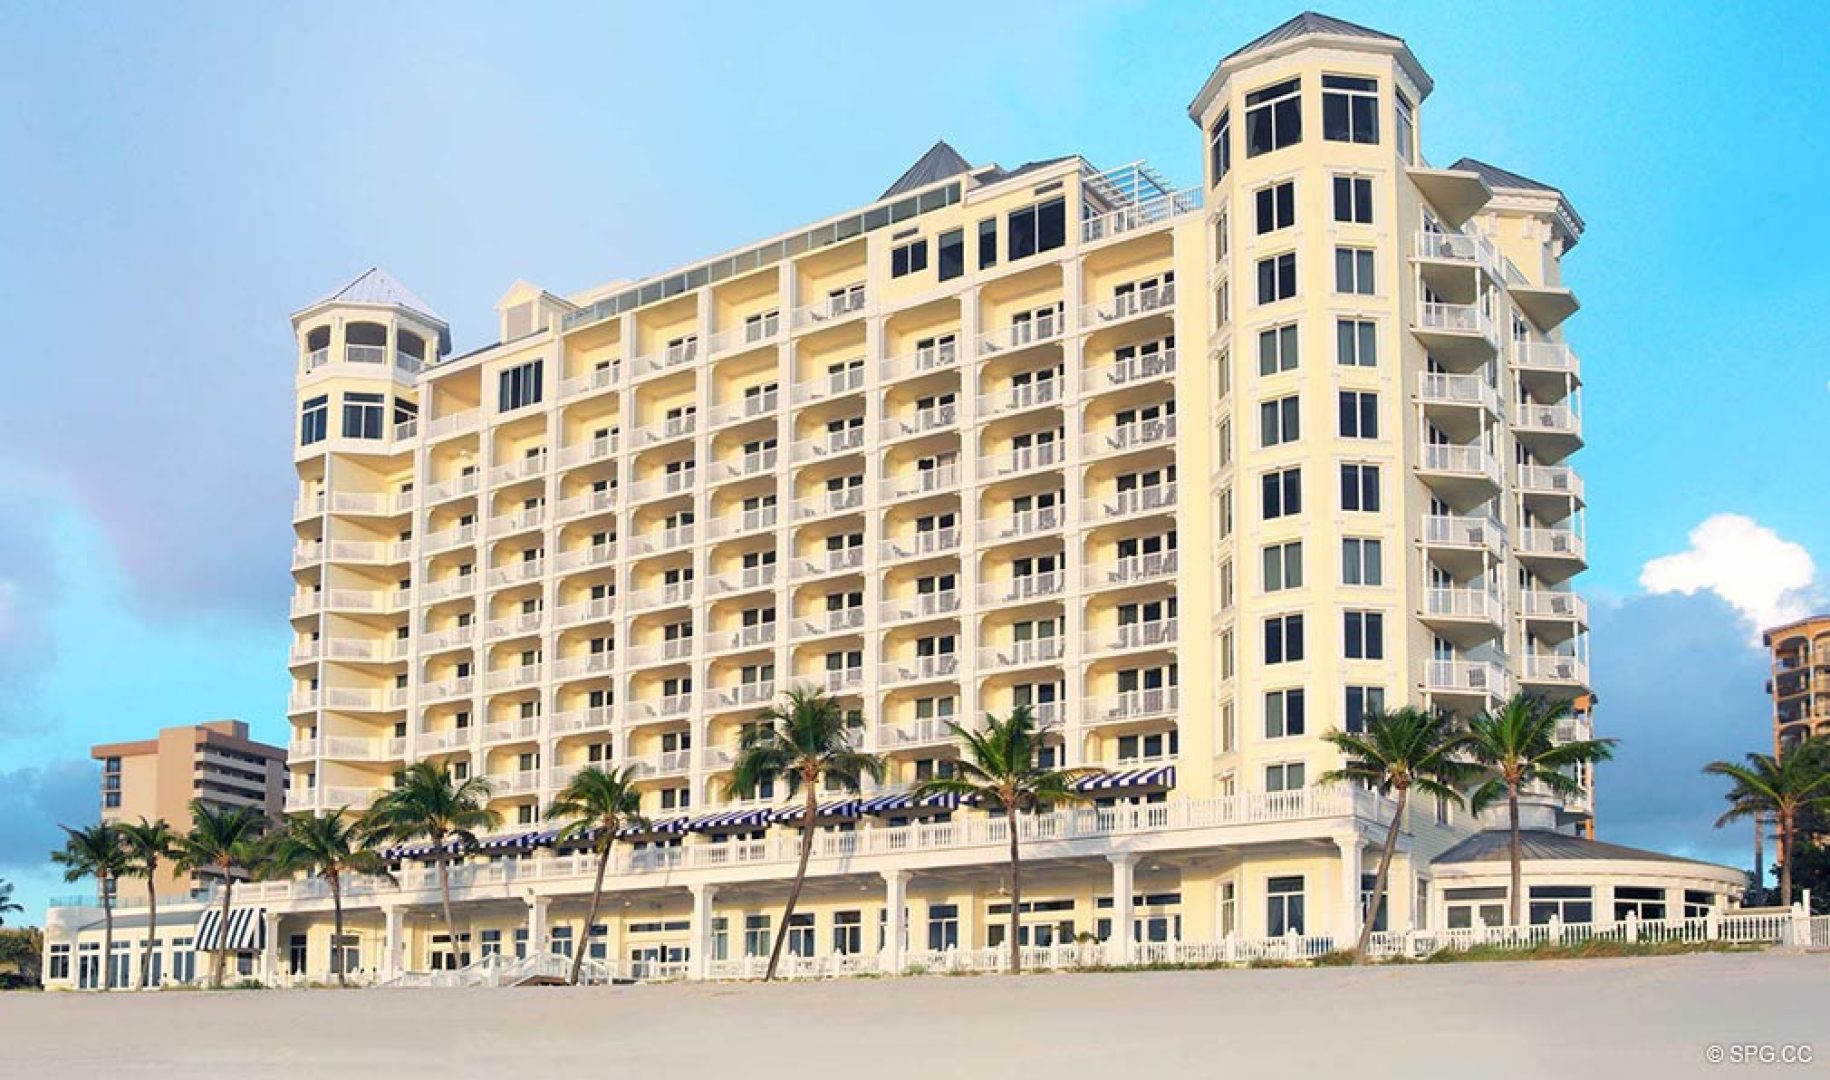 Beach View of Pelican Grand Beach Resort, Luxury Oceanfront Condos in Fort Lauderdale